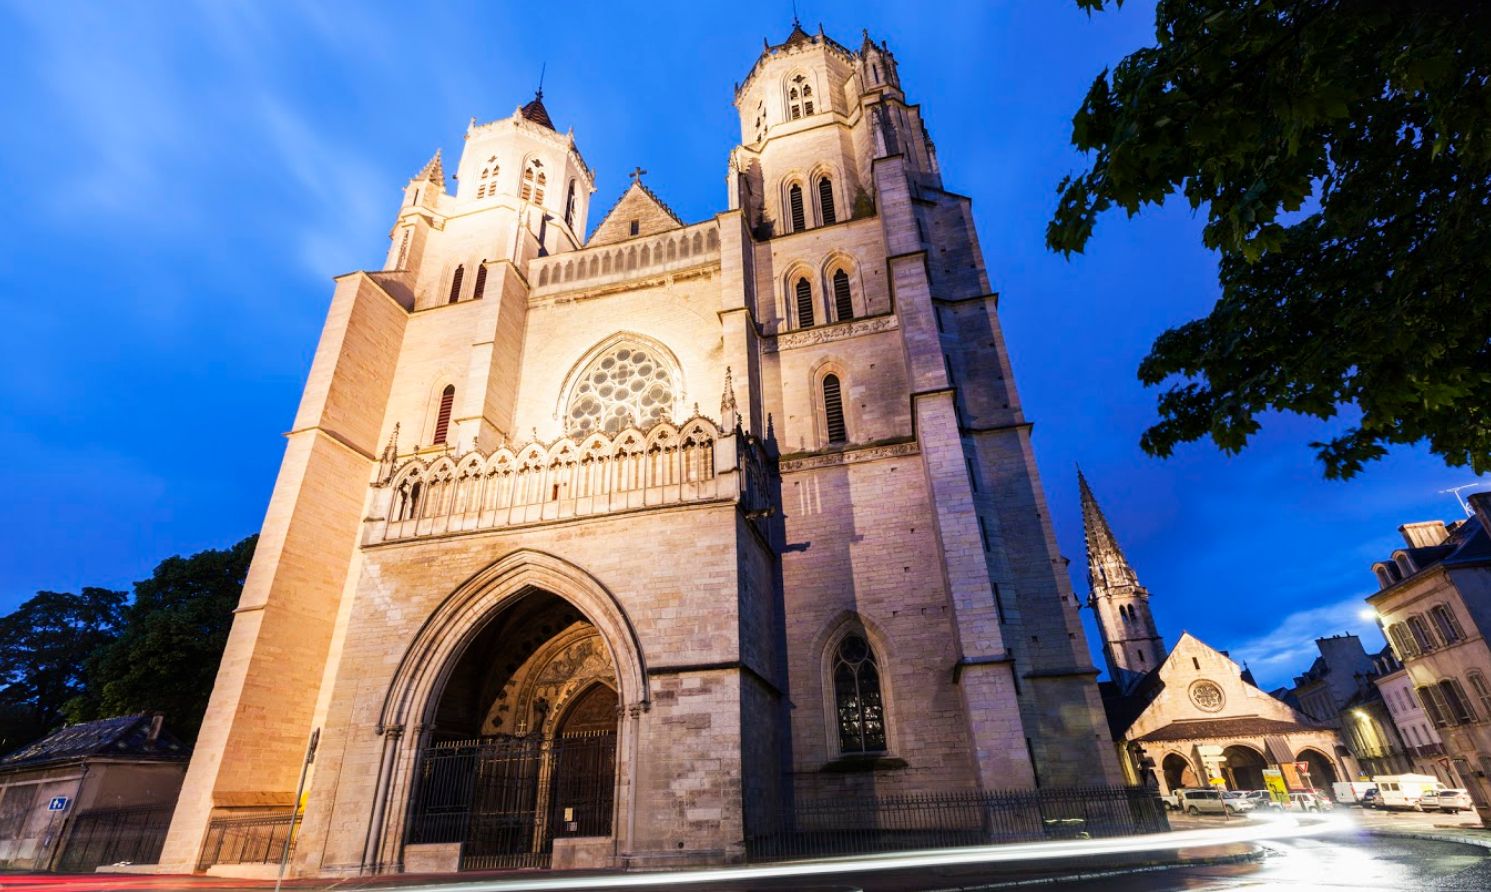 Cathédrale Saint-Bénigne de Dijon, Bourgogne - France ©iStock